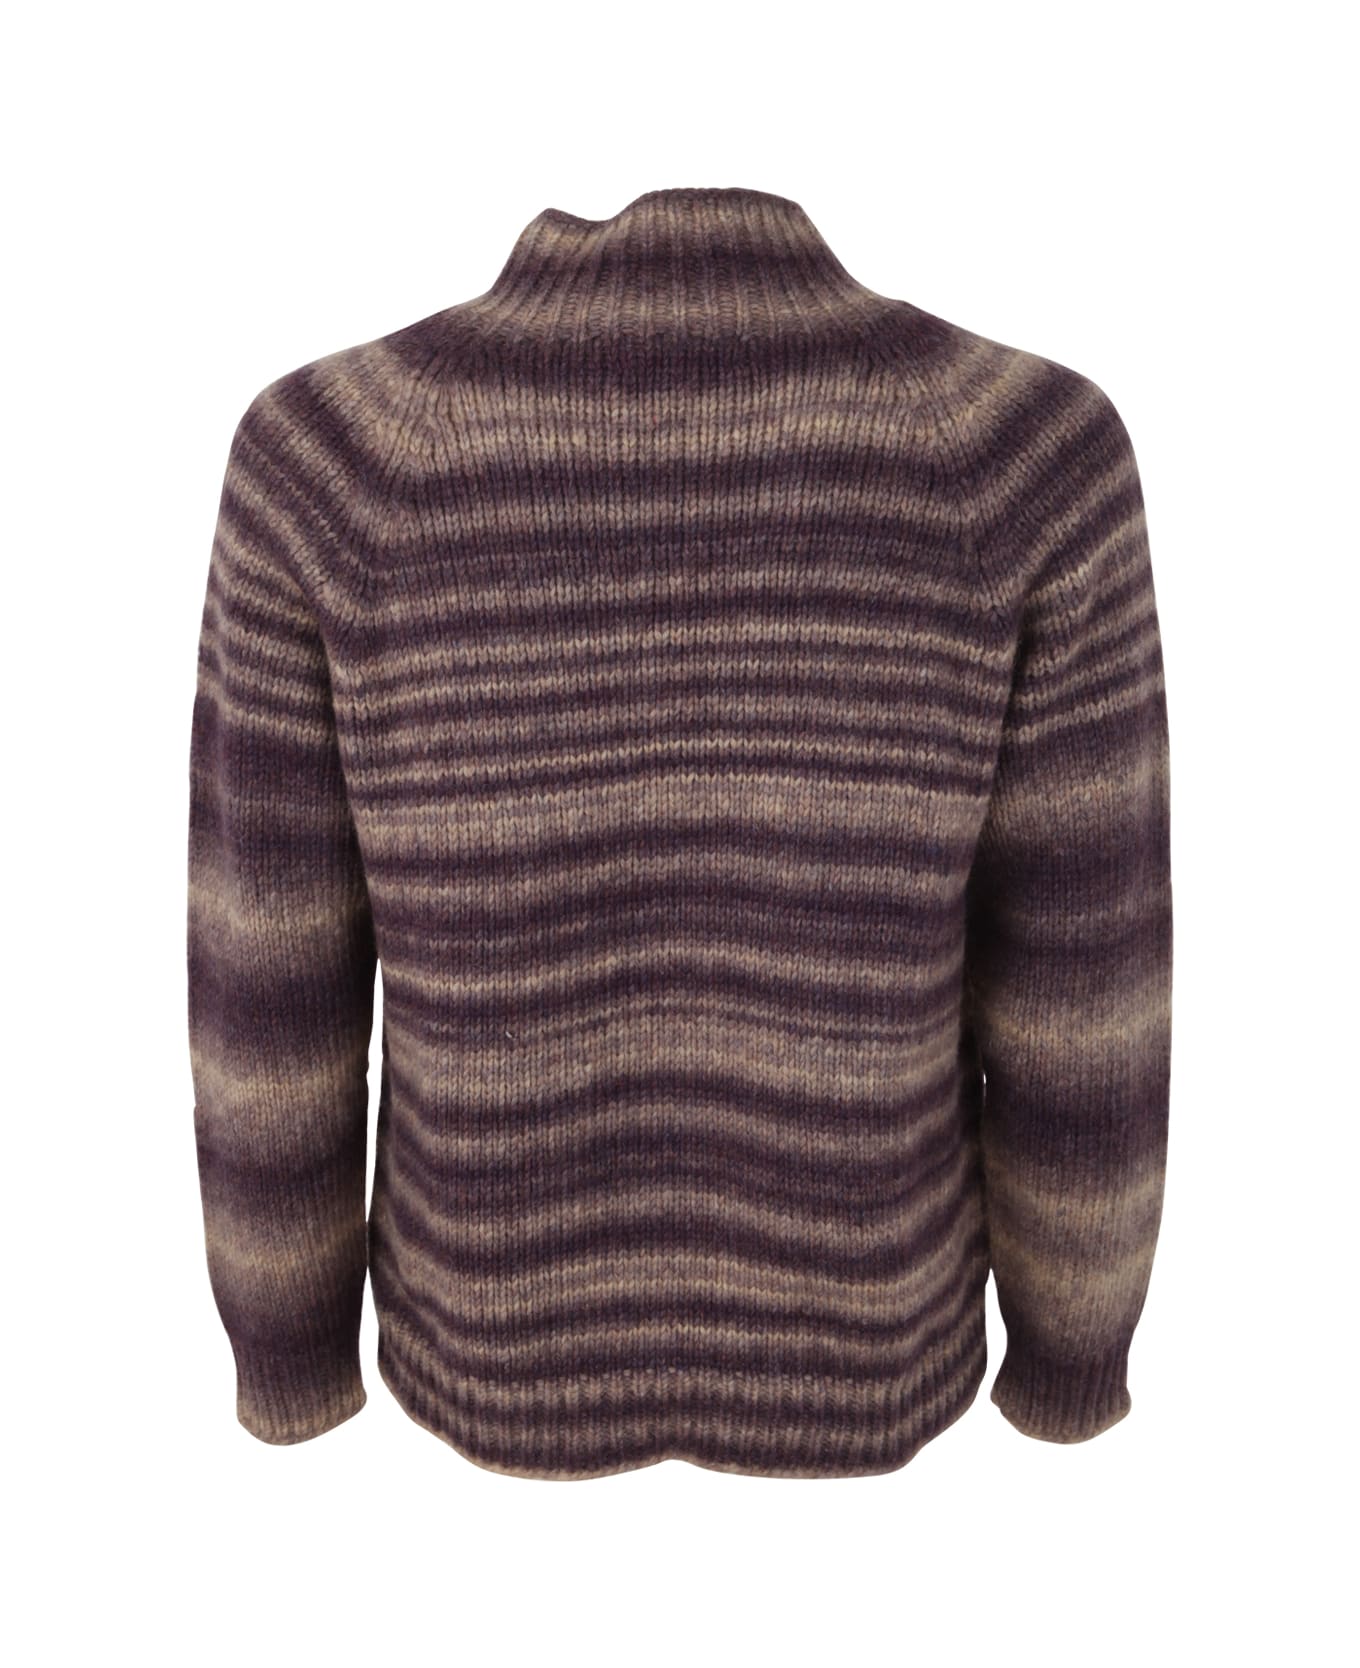 Lardini Man Knit Sweater - Be